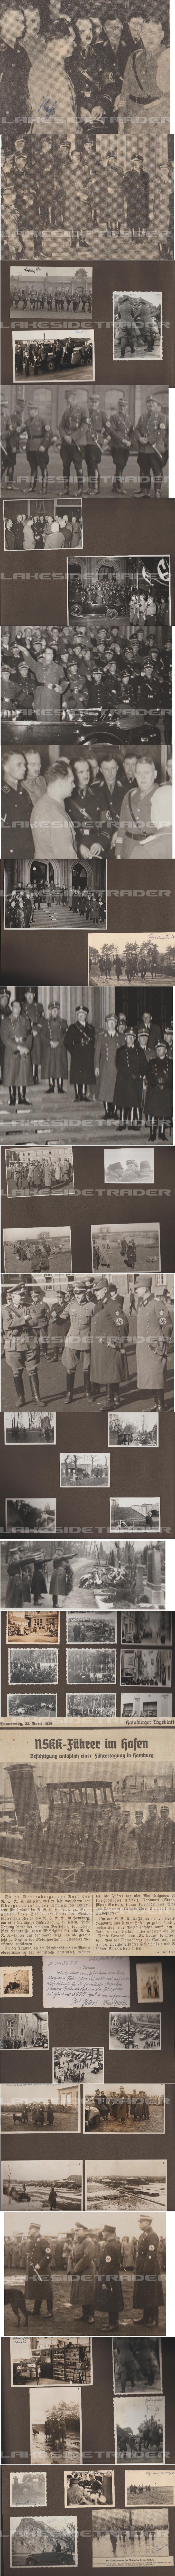 Personal Photo Album of NSKK Brigadefuhrer Uhde